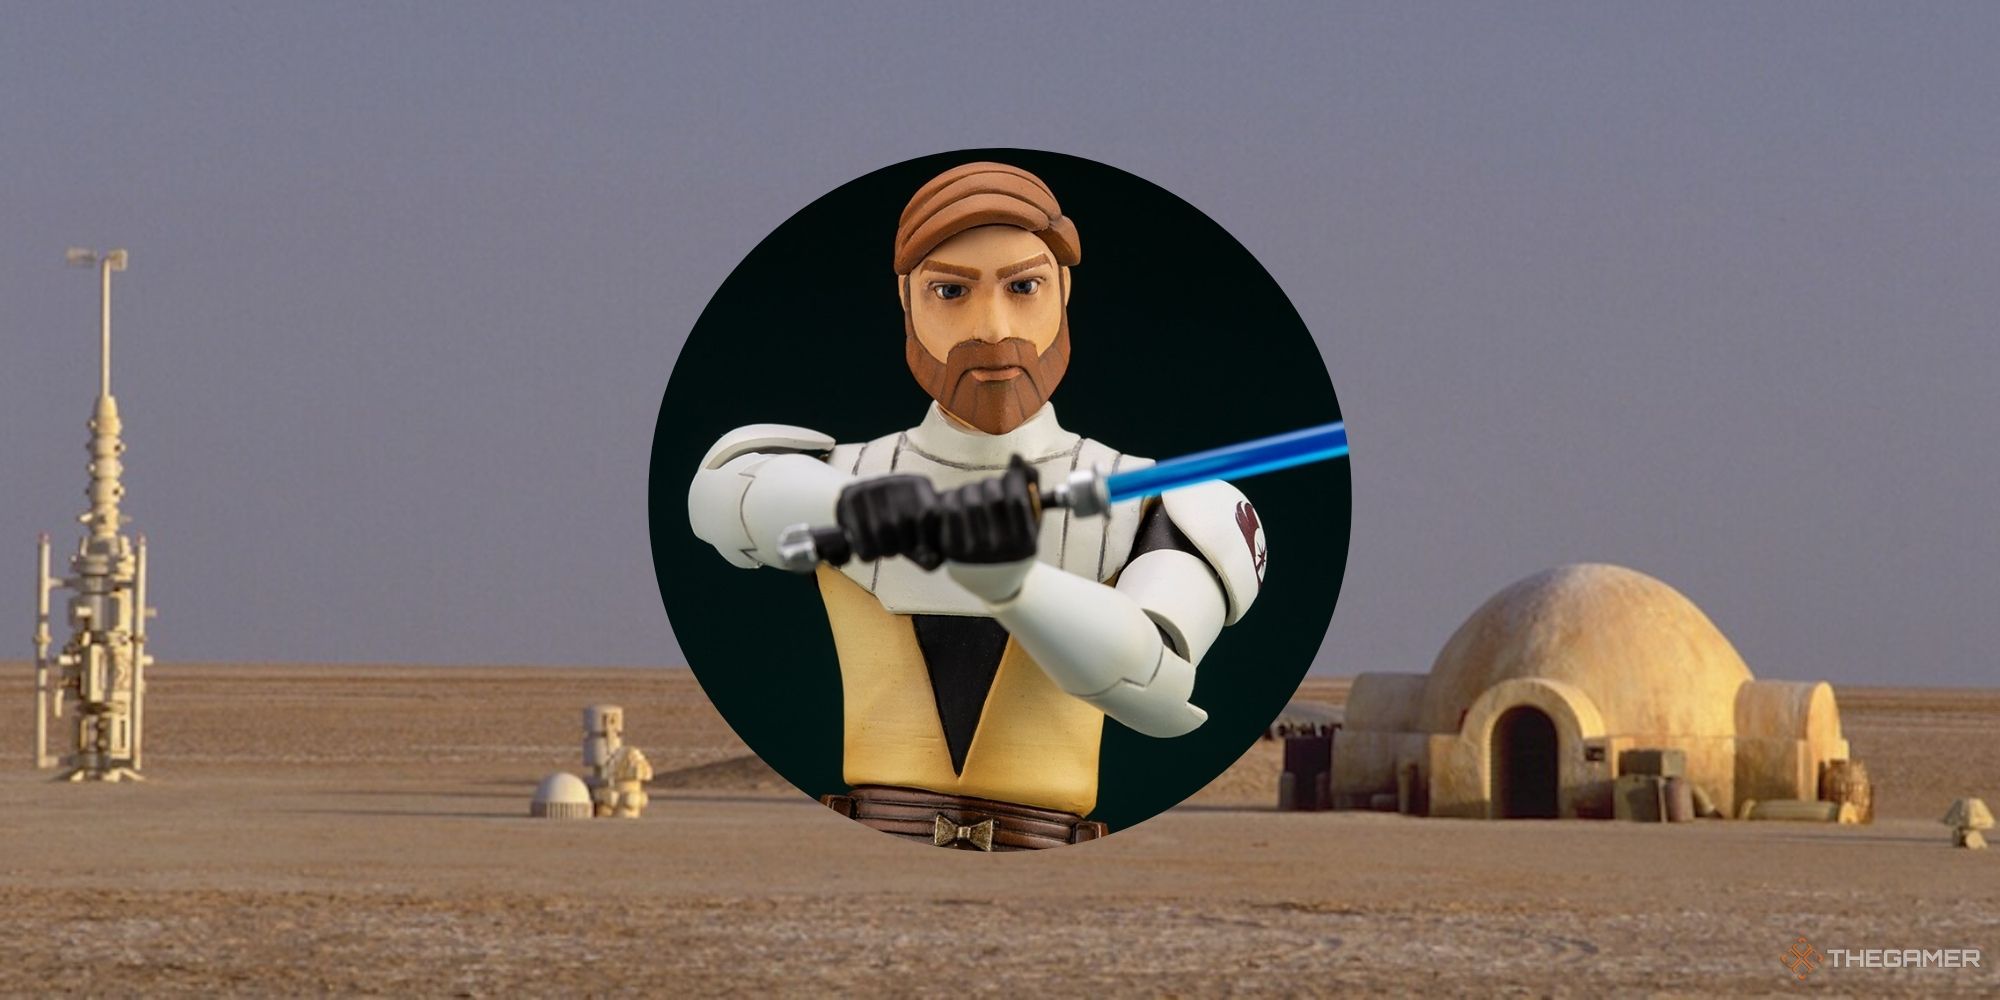 Star Wars Kotobukiya Figures Featured Image Obi-Wan Kenobi in a circle with a Tatooine background